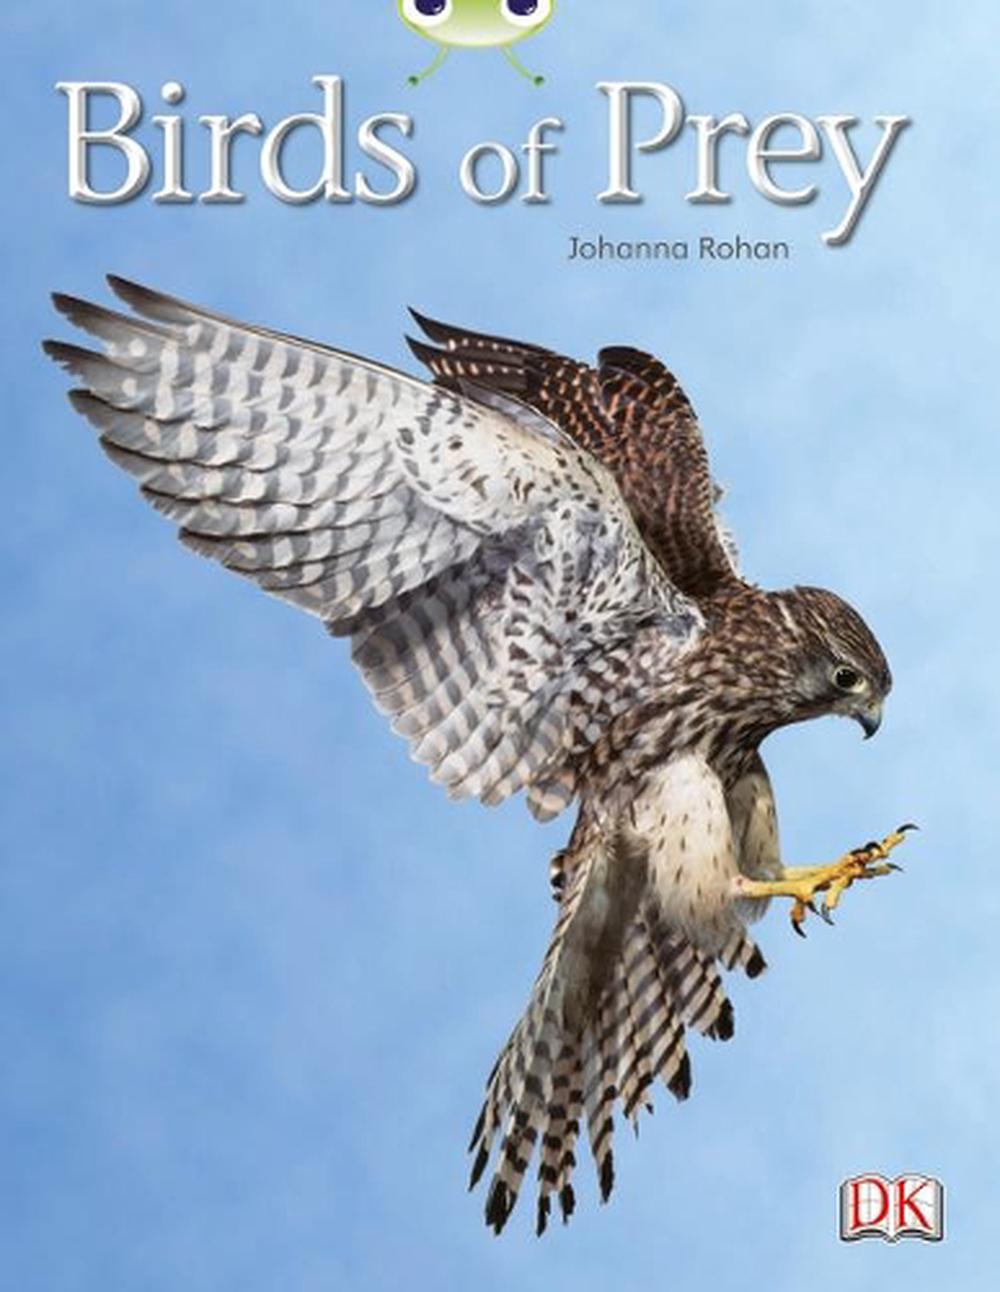 birds of prey book images